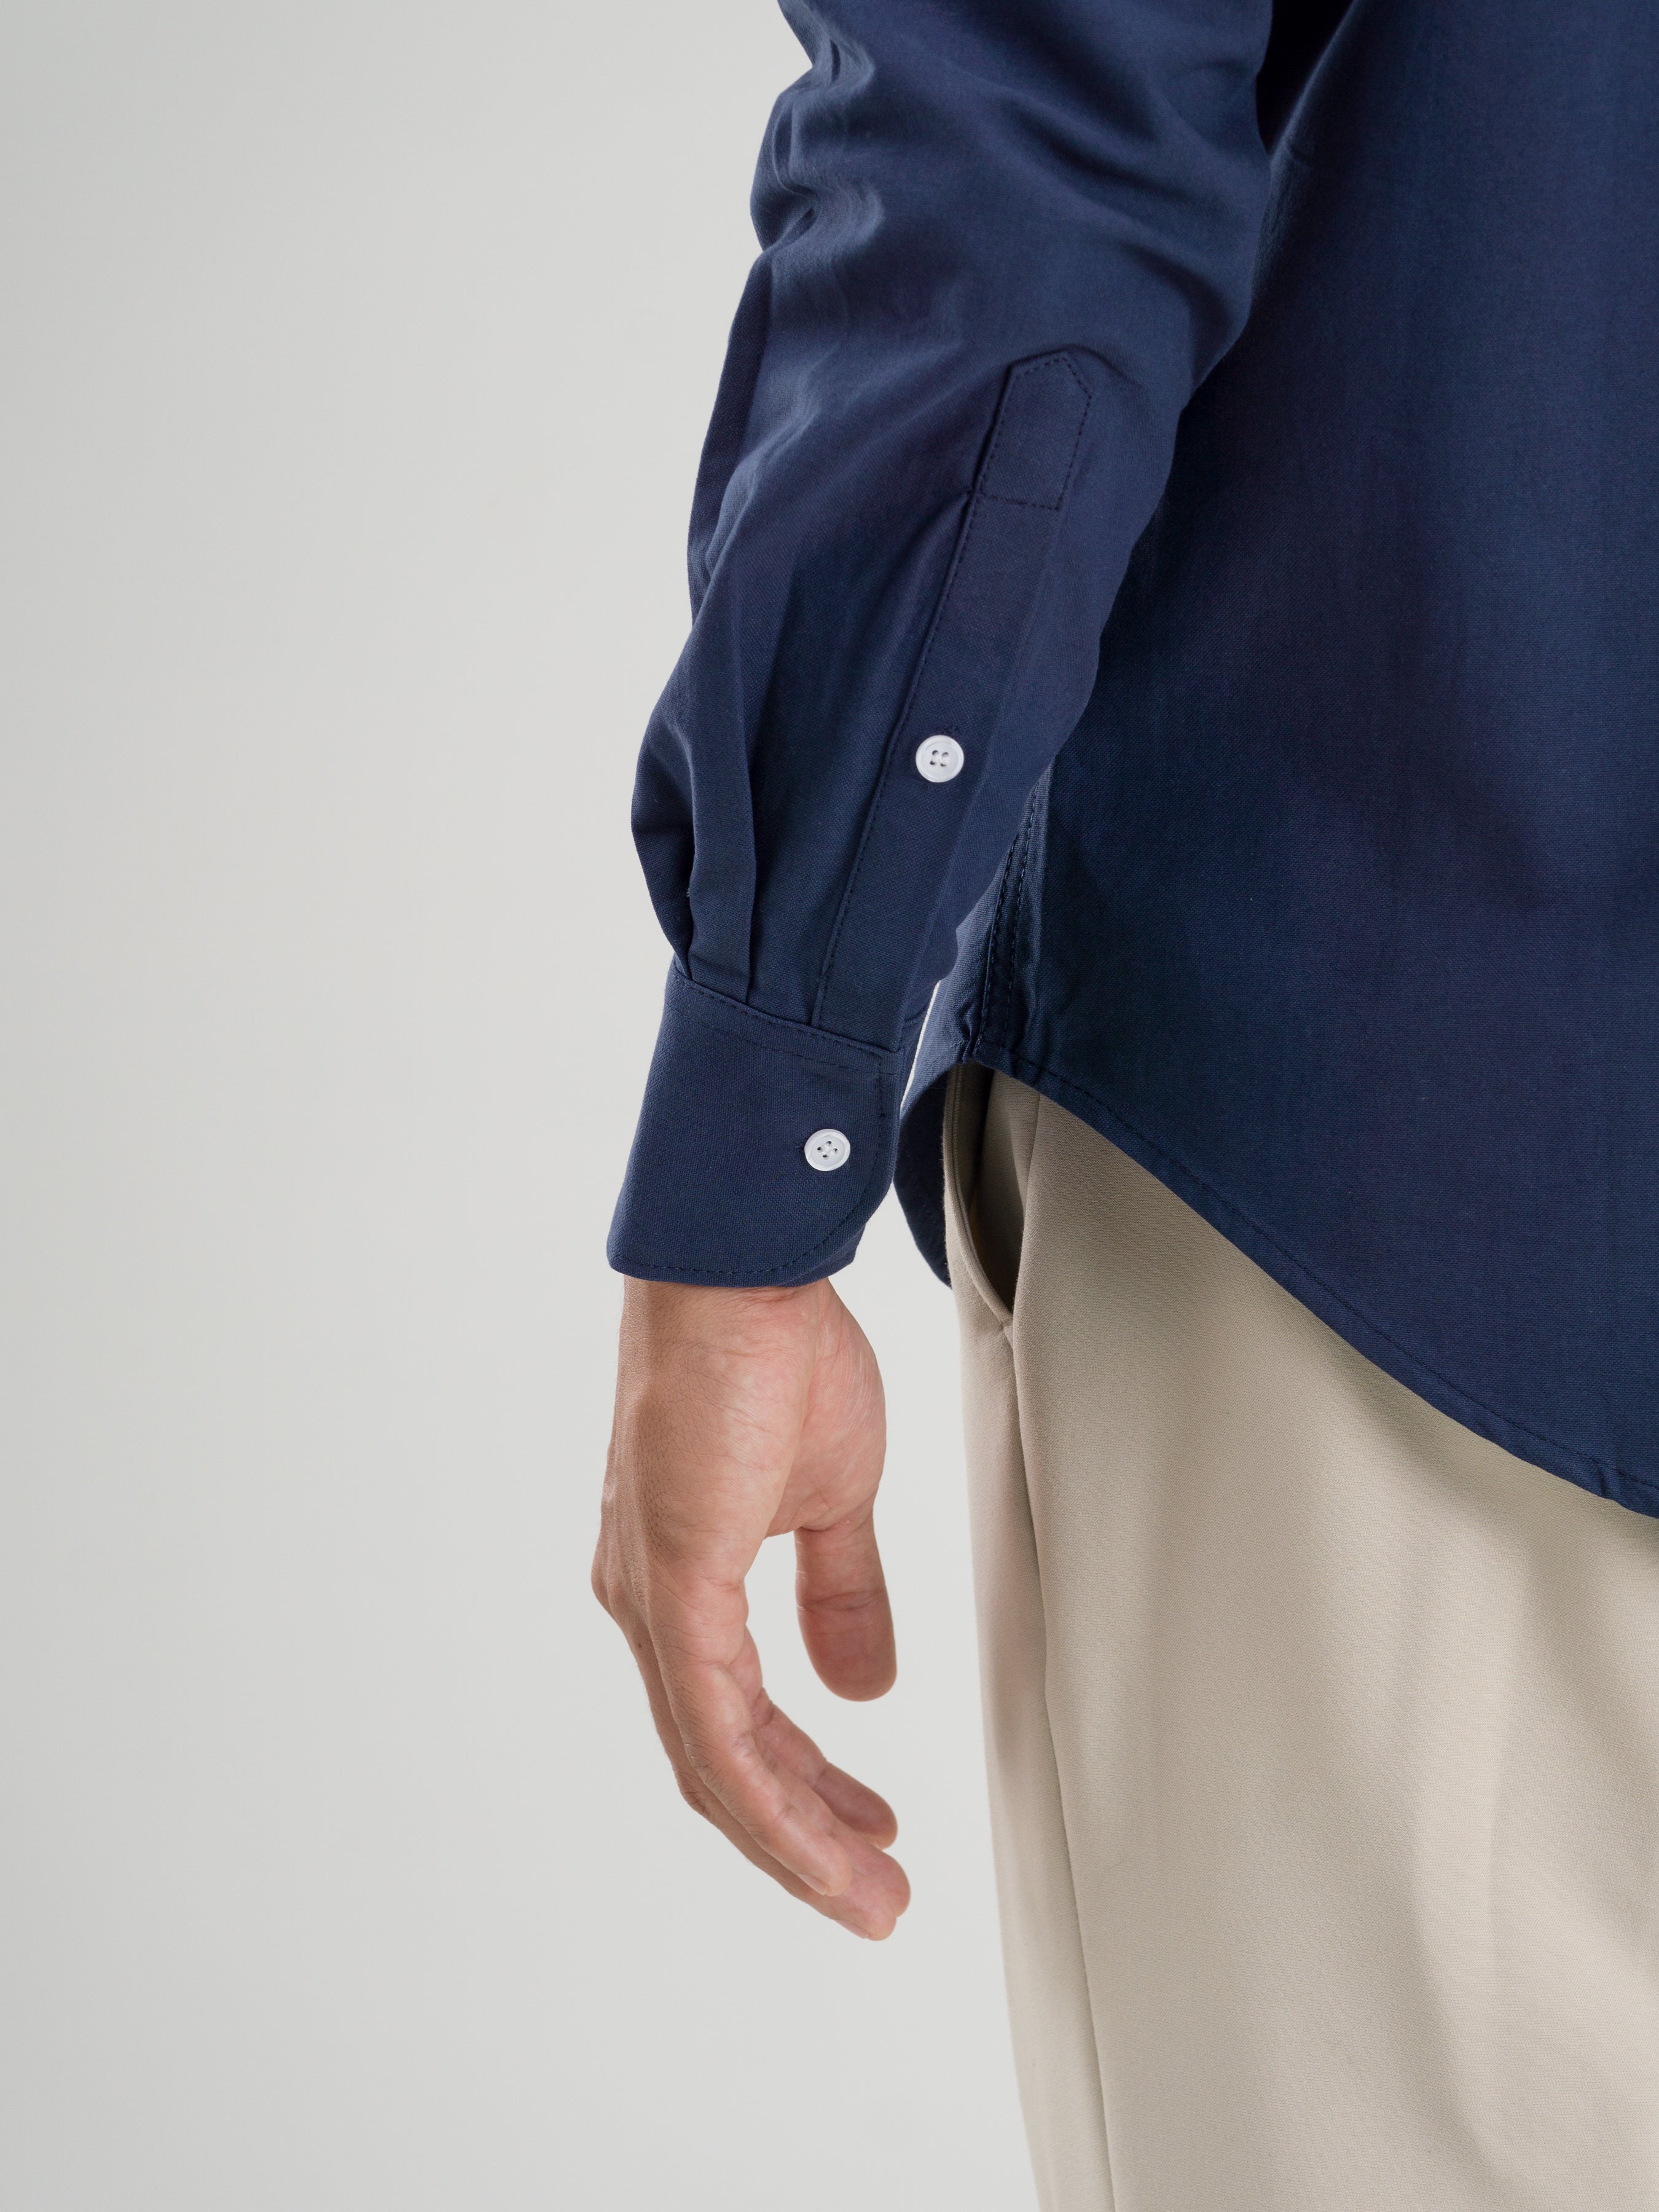 Formal Shirt - Dark Blue Oxford Button-Down Collar